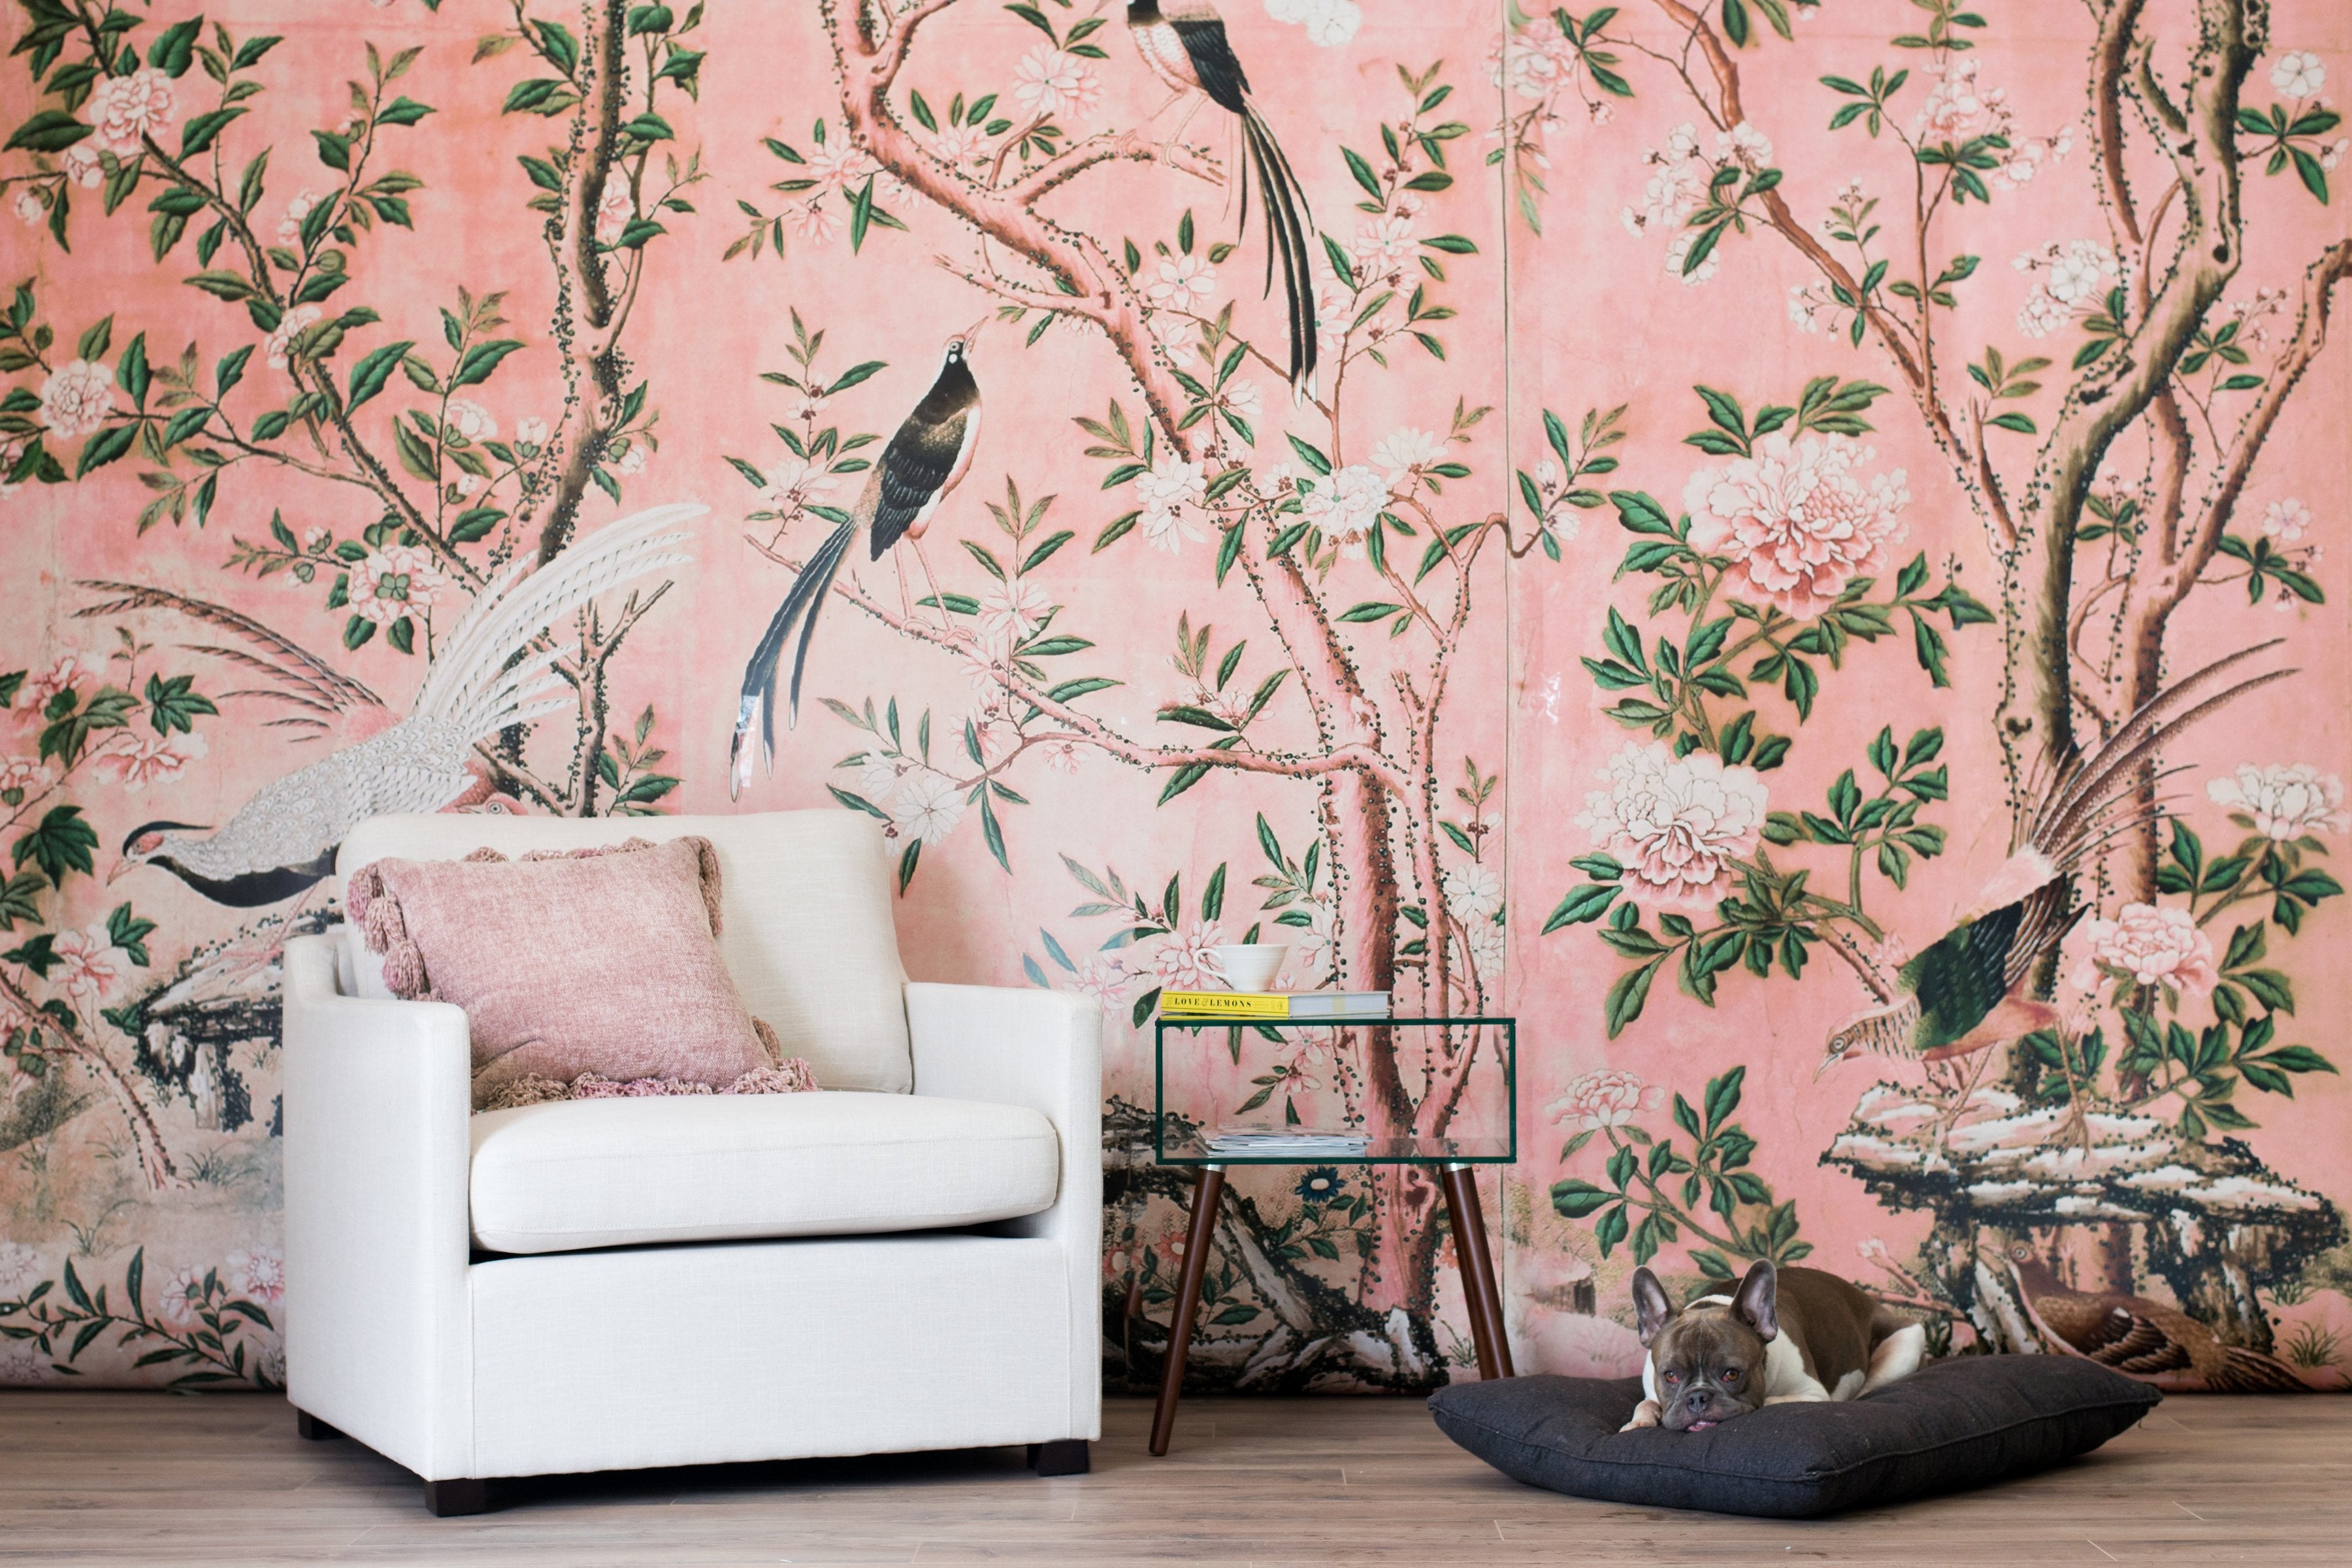 Pastel Pink Wallpaper for Walls Magnolia Mural Chinoiserie Garden  Wallpaper Decor  anewall  Anewall